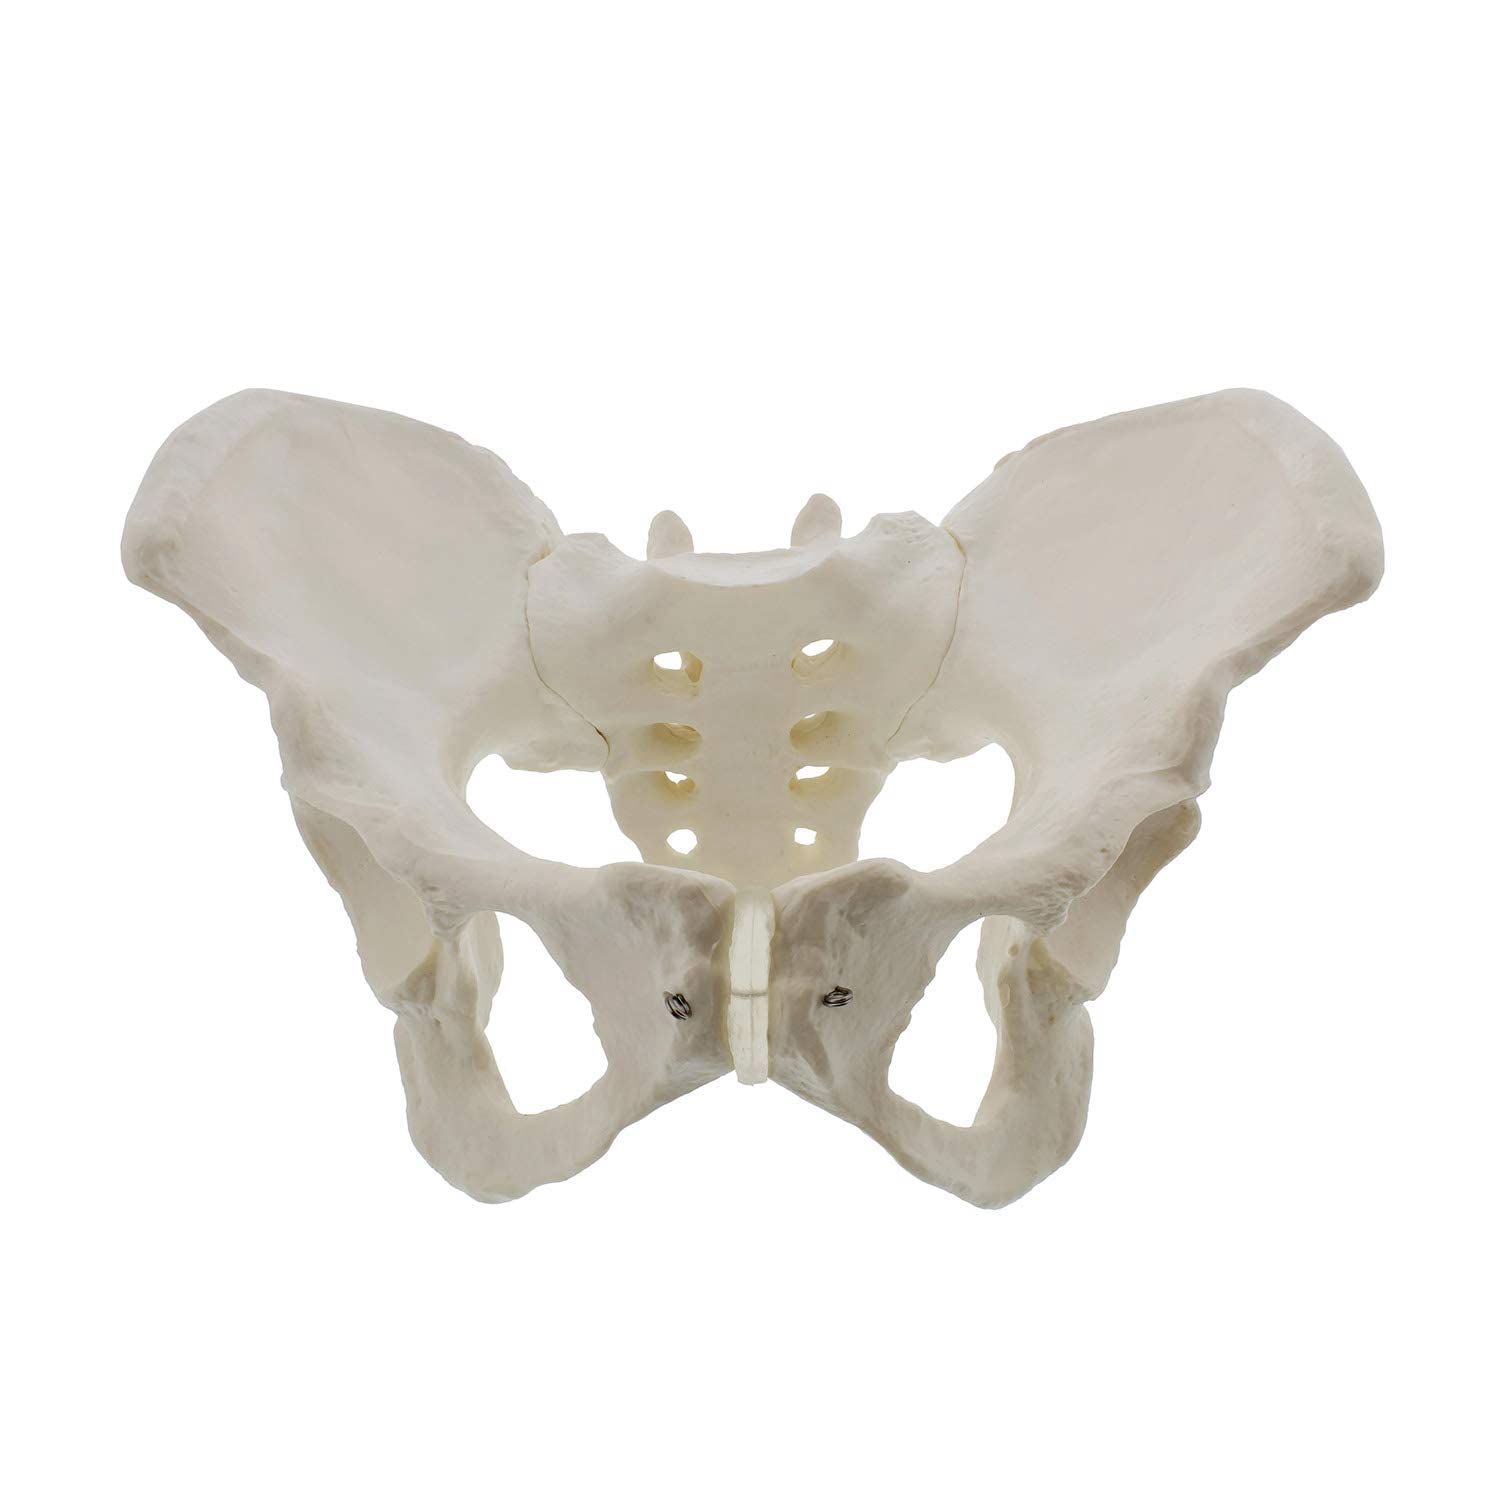 Fltaheroo LebensgroßEs Weibliches Becken Modell, HüFt Modell - Weibliches Anatomie Modell, HüFt Knochen Becken Modell Weibliches Anatomisches Modell